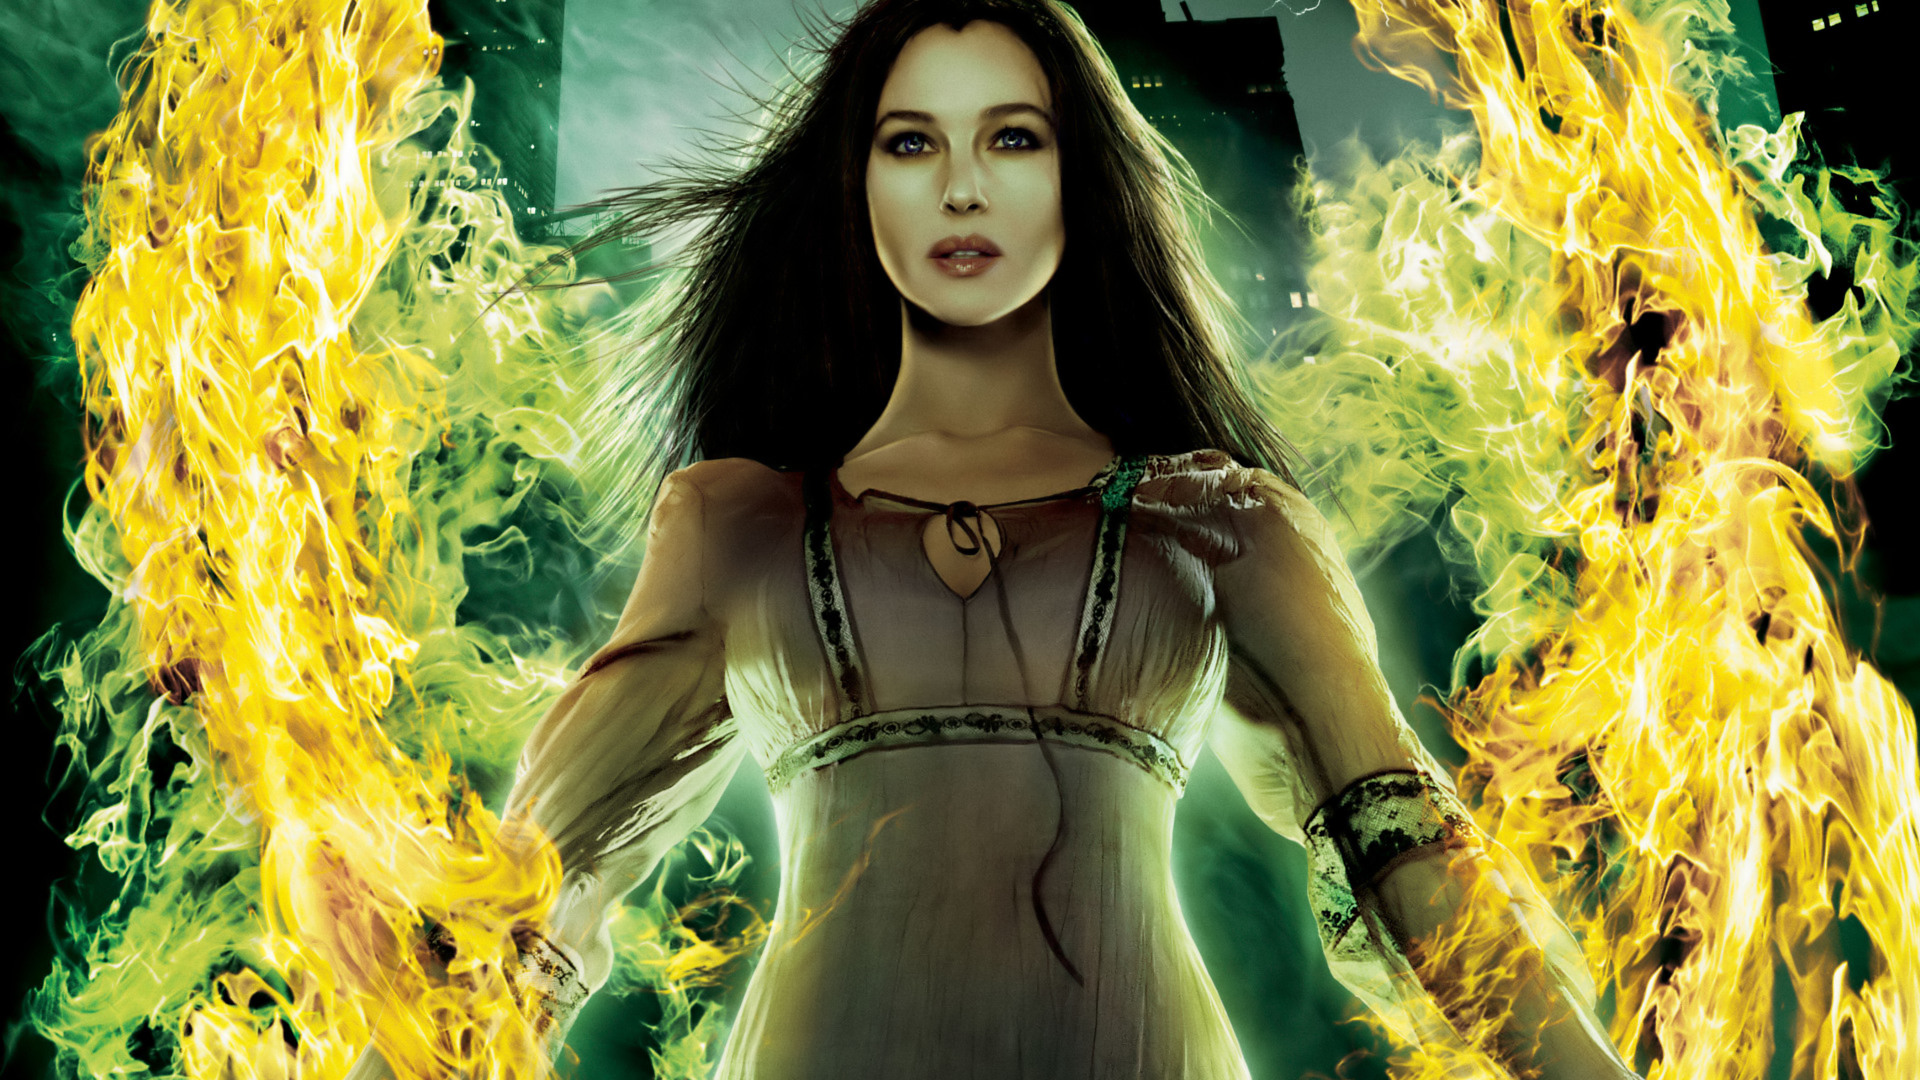 Movie The Sorcerer's Apprentice HD Wallpaper | Background Image